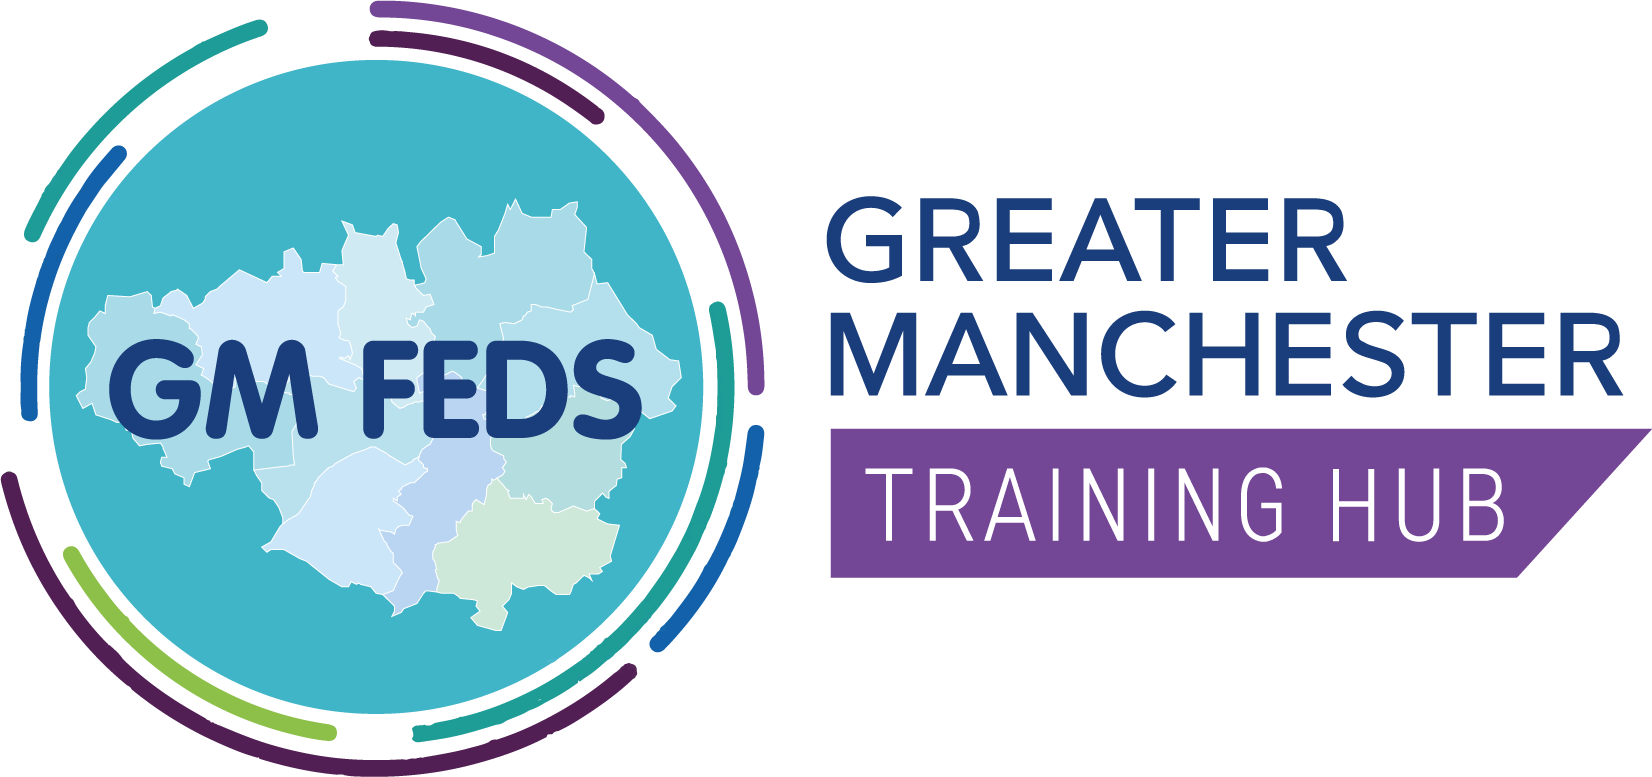 Greater Manchester Training Hub logo